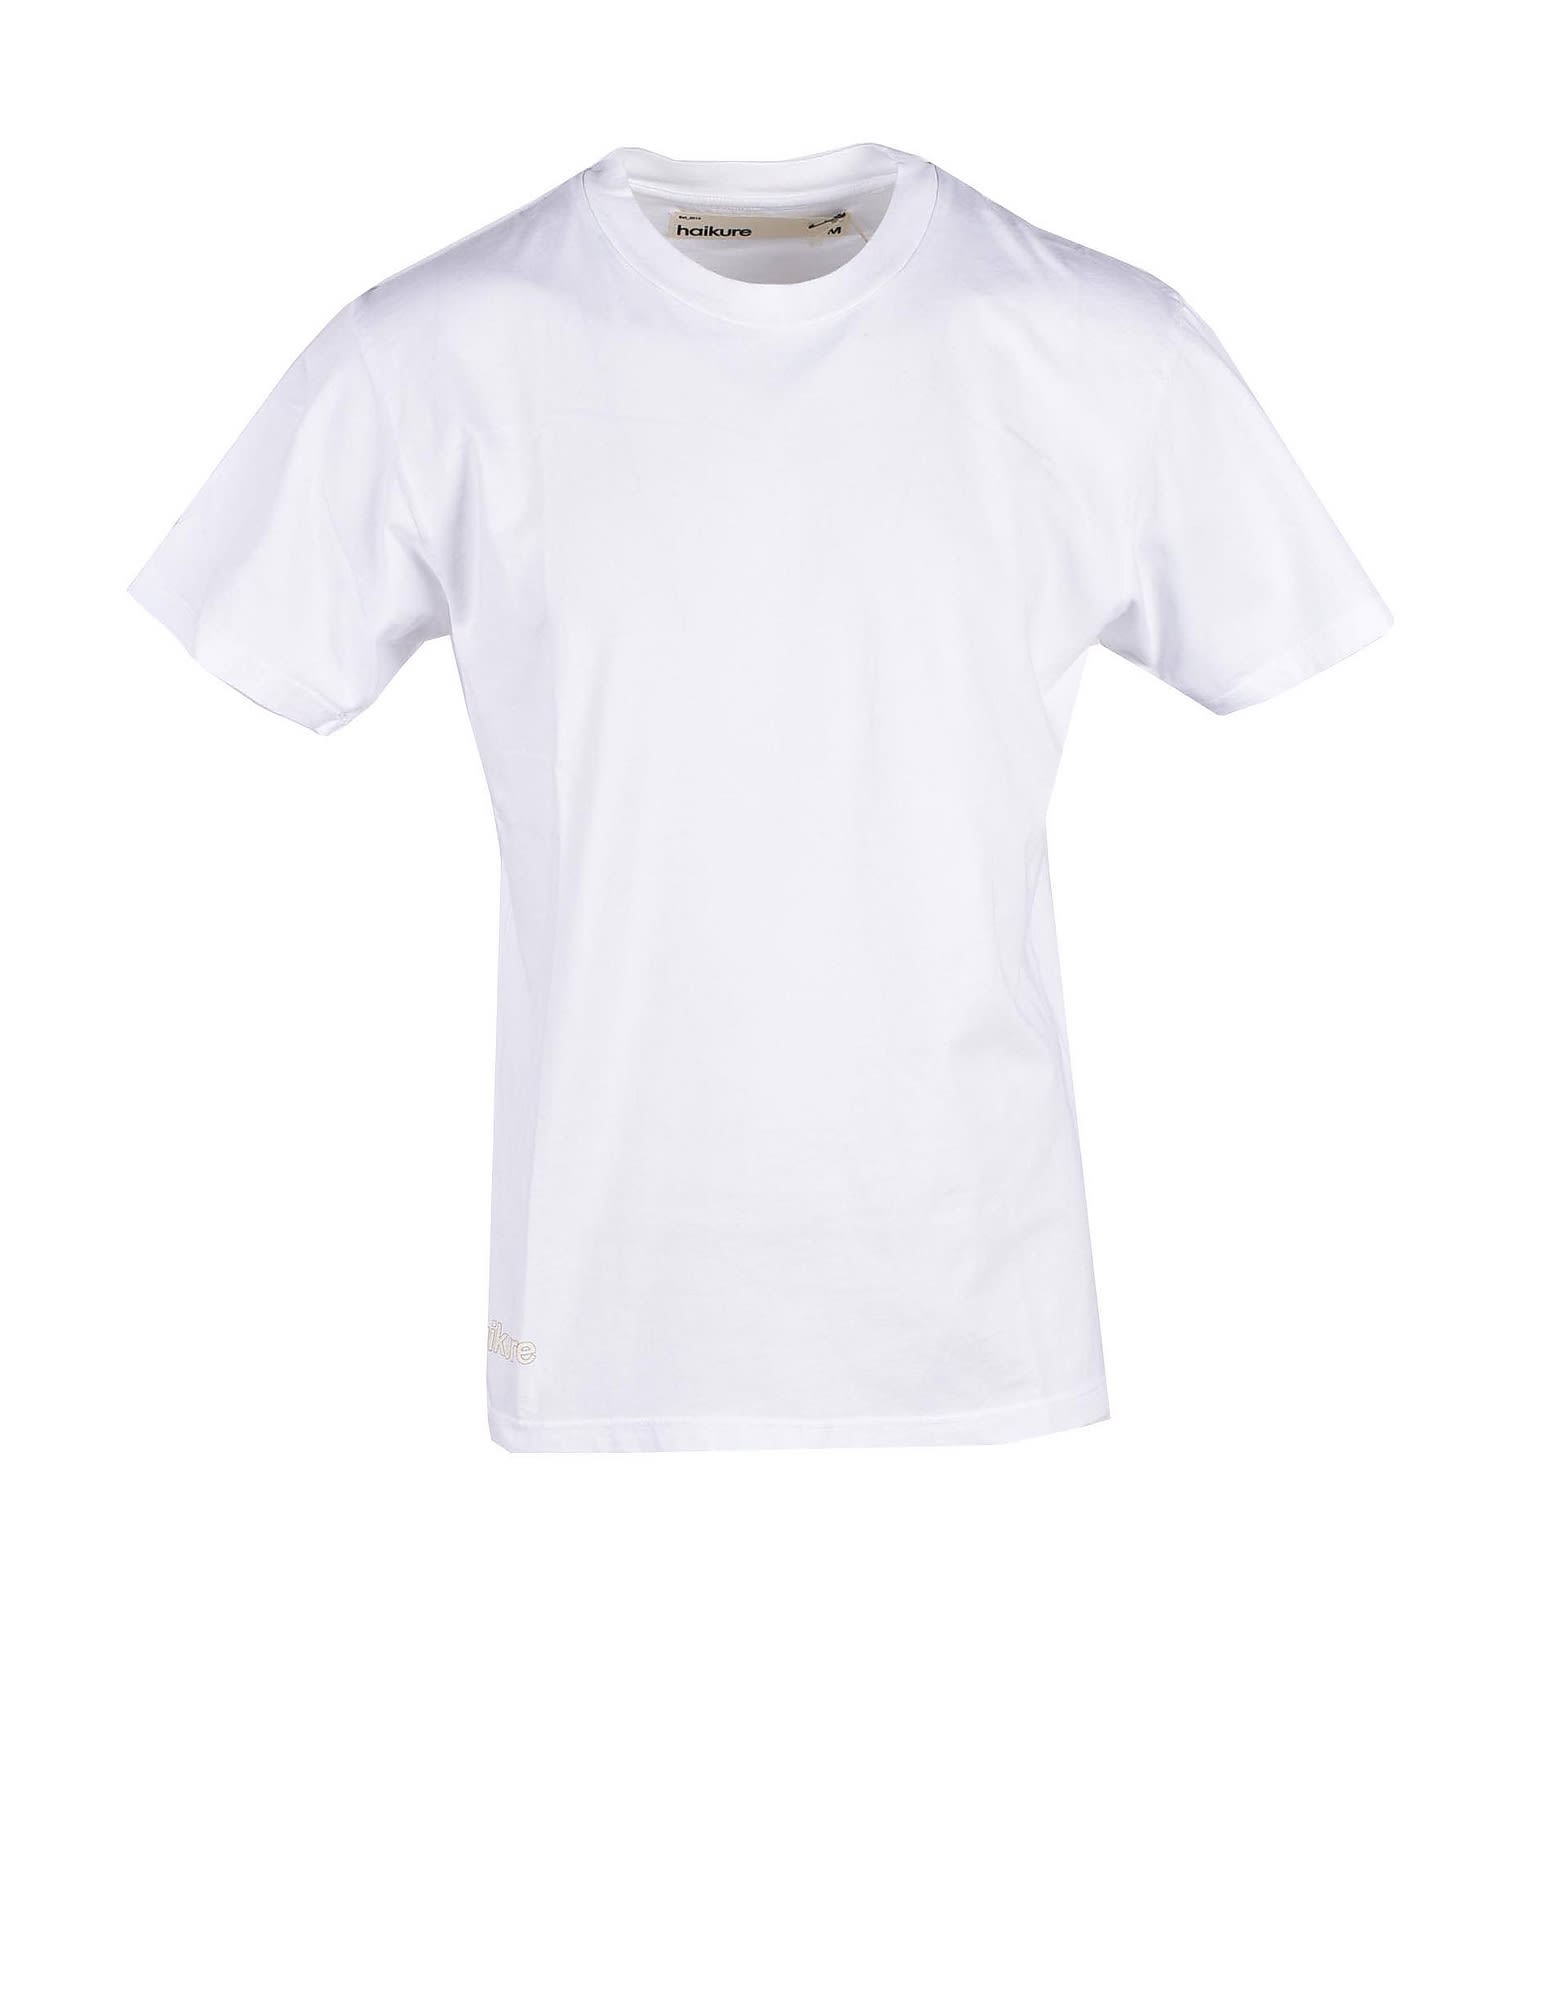 Haikure Mens White T-shirt